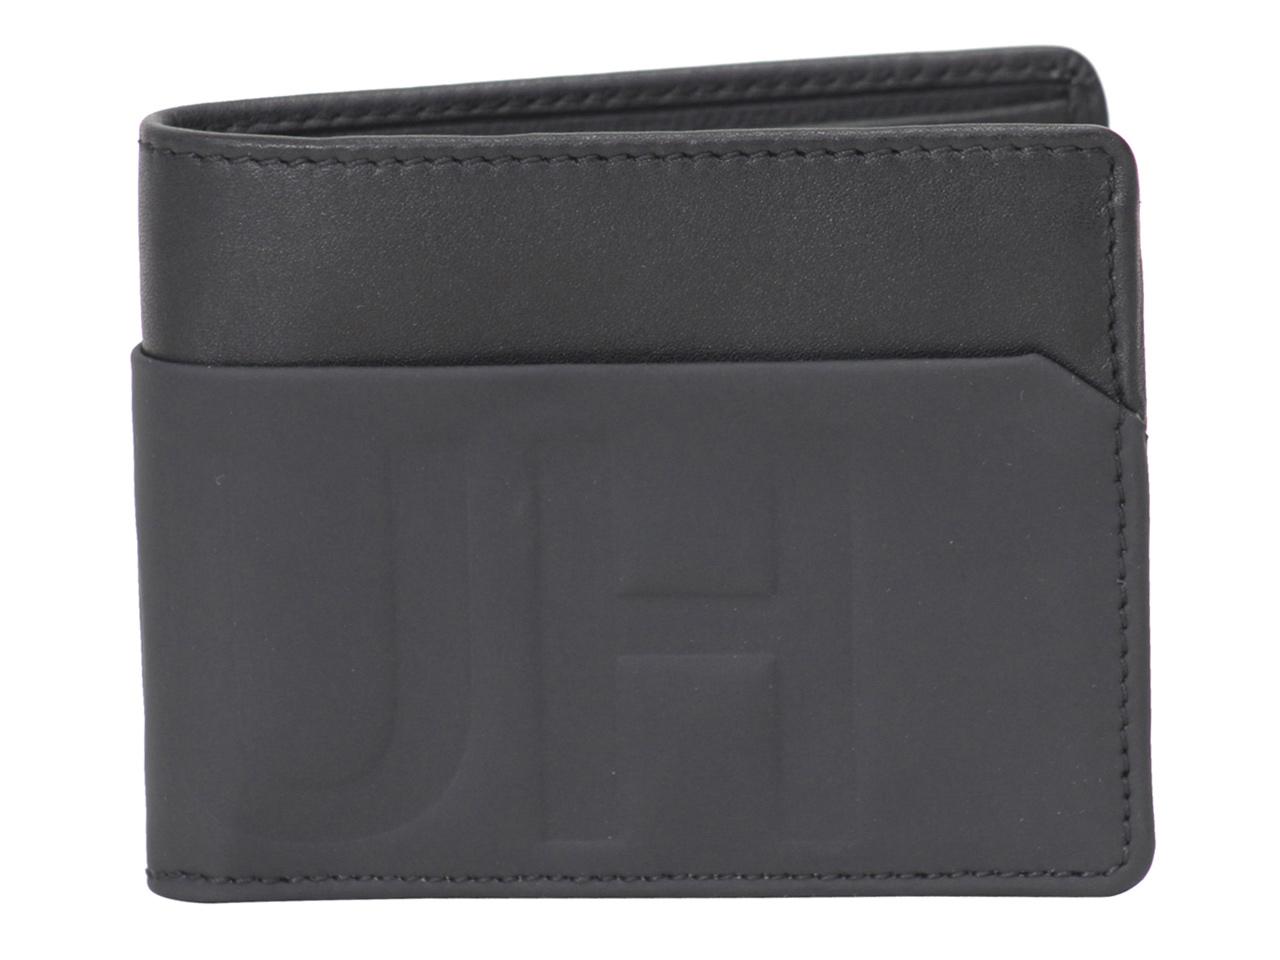 hugo boss genuine leather wallet